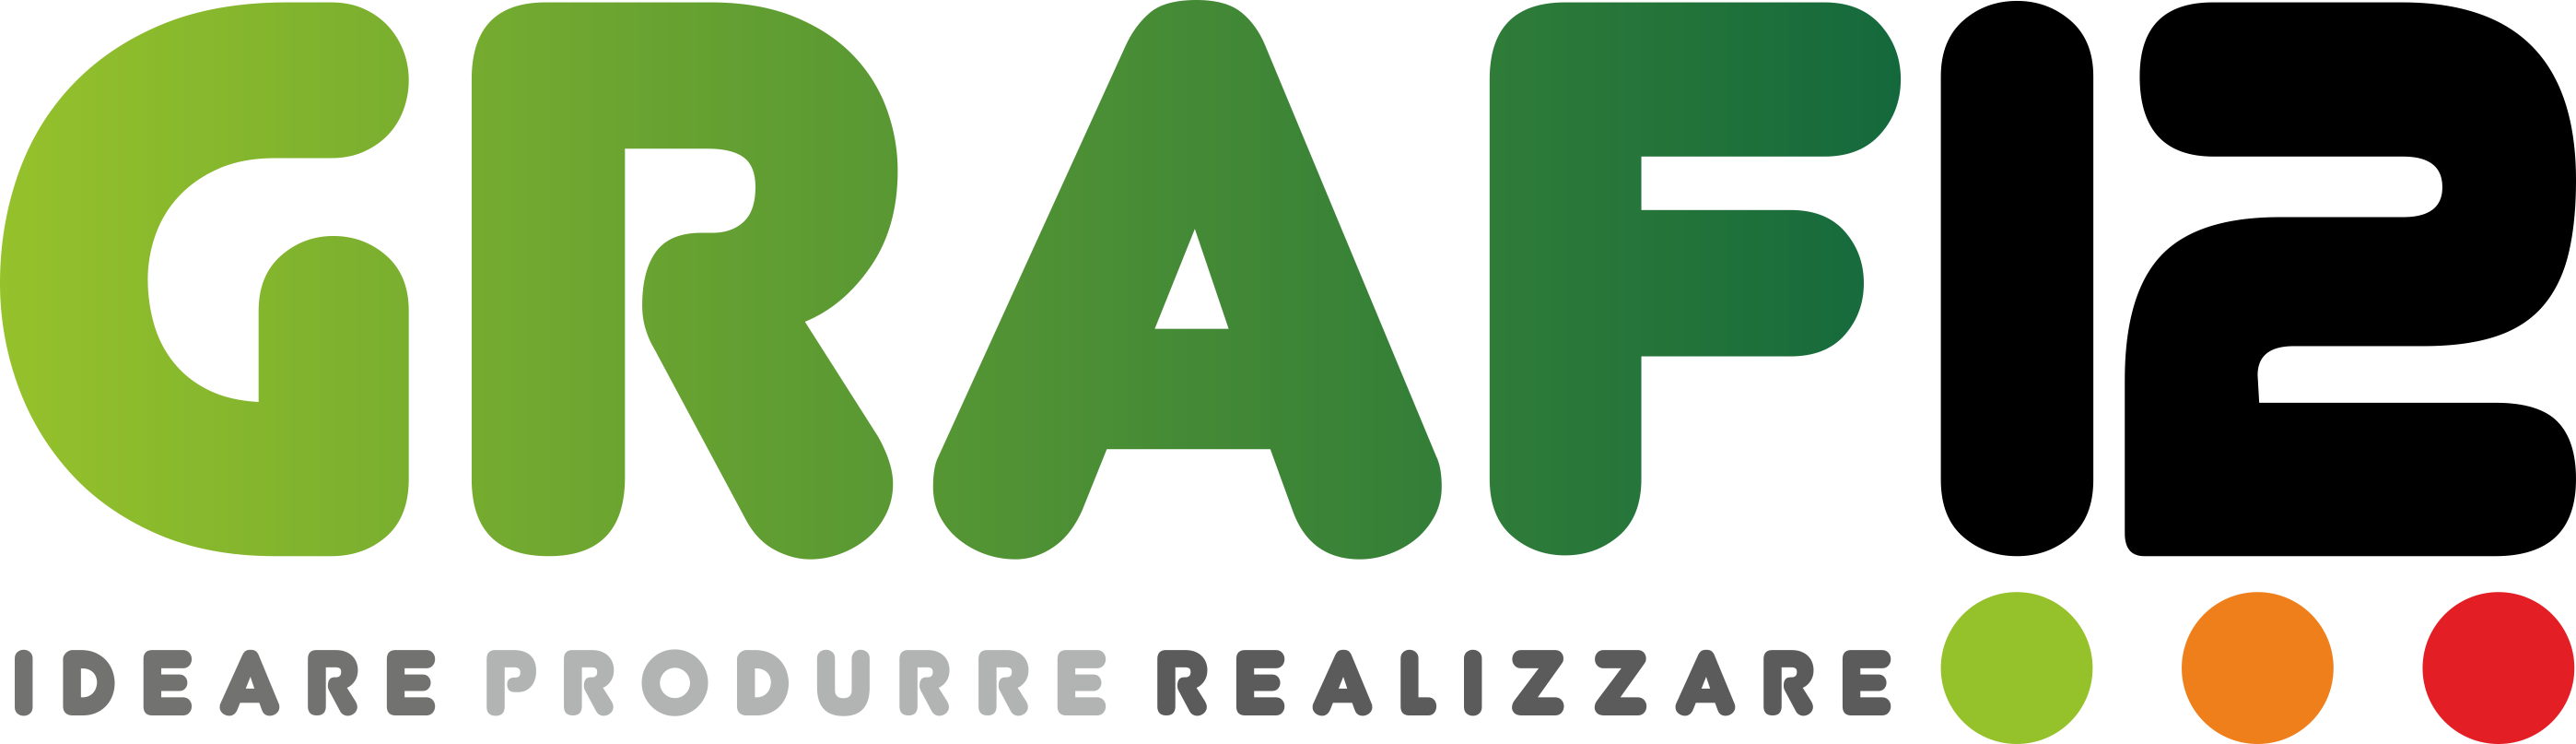 GRAFI2 logo-design